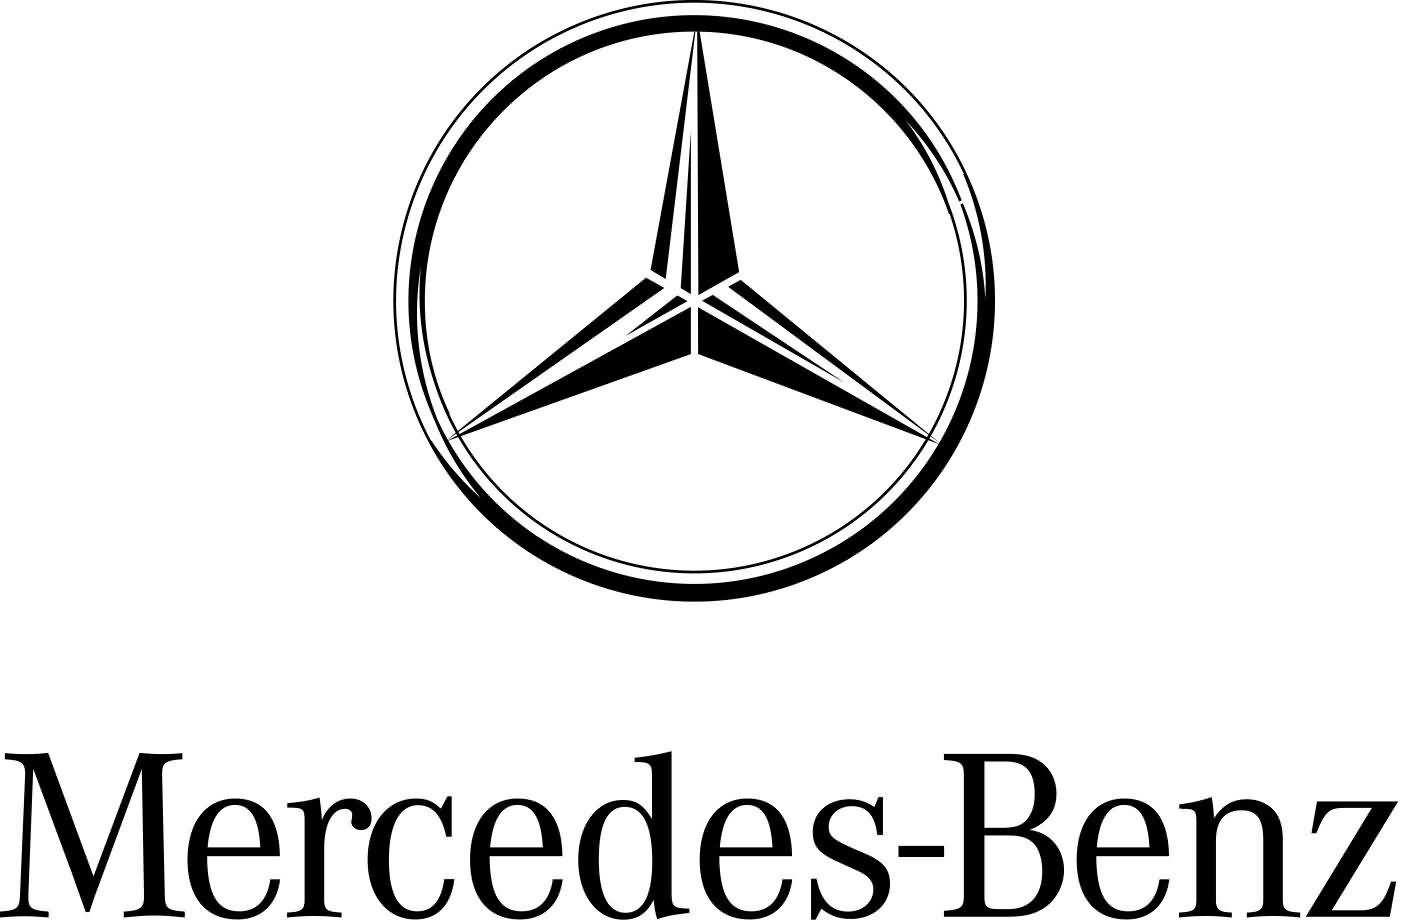 Daimler Car Logo - Mercedes Logo, Mercedes-Benz Car Symbol Meaning and History | Car ...